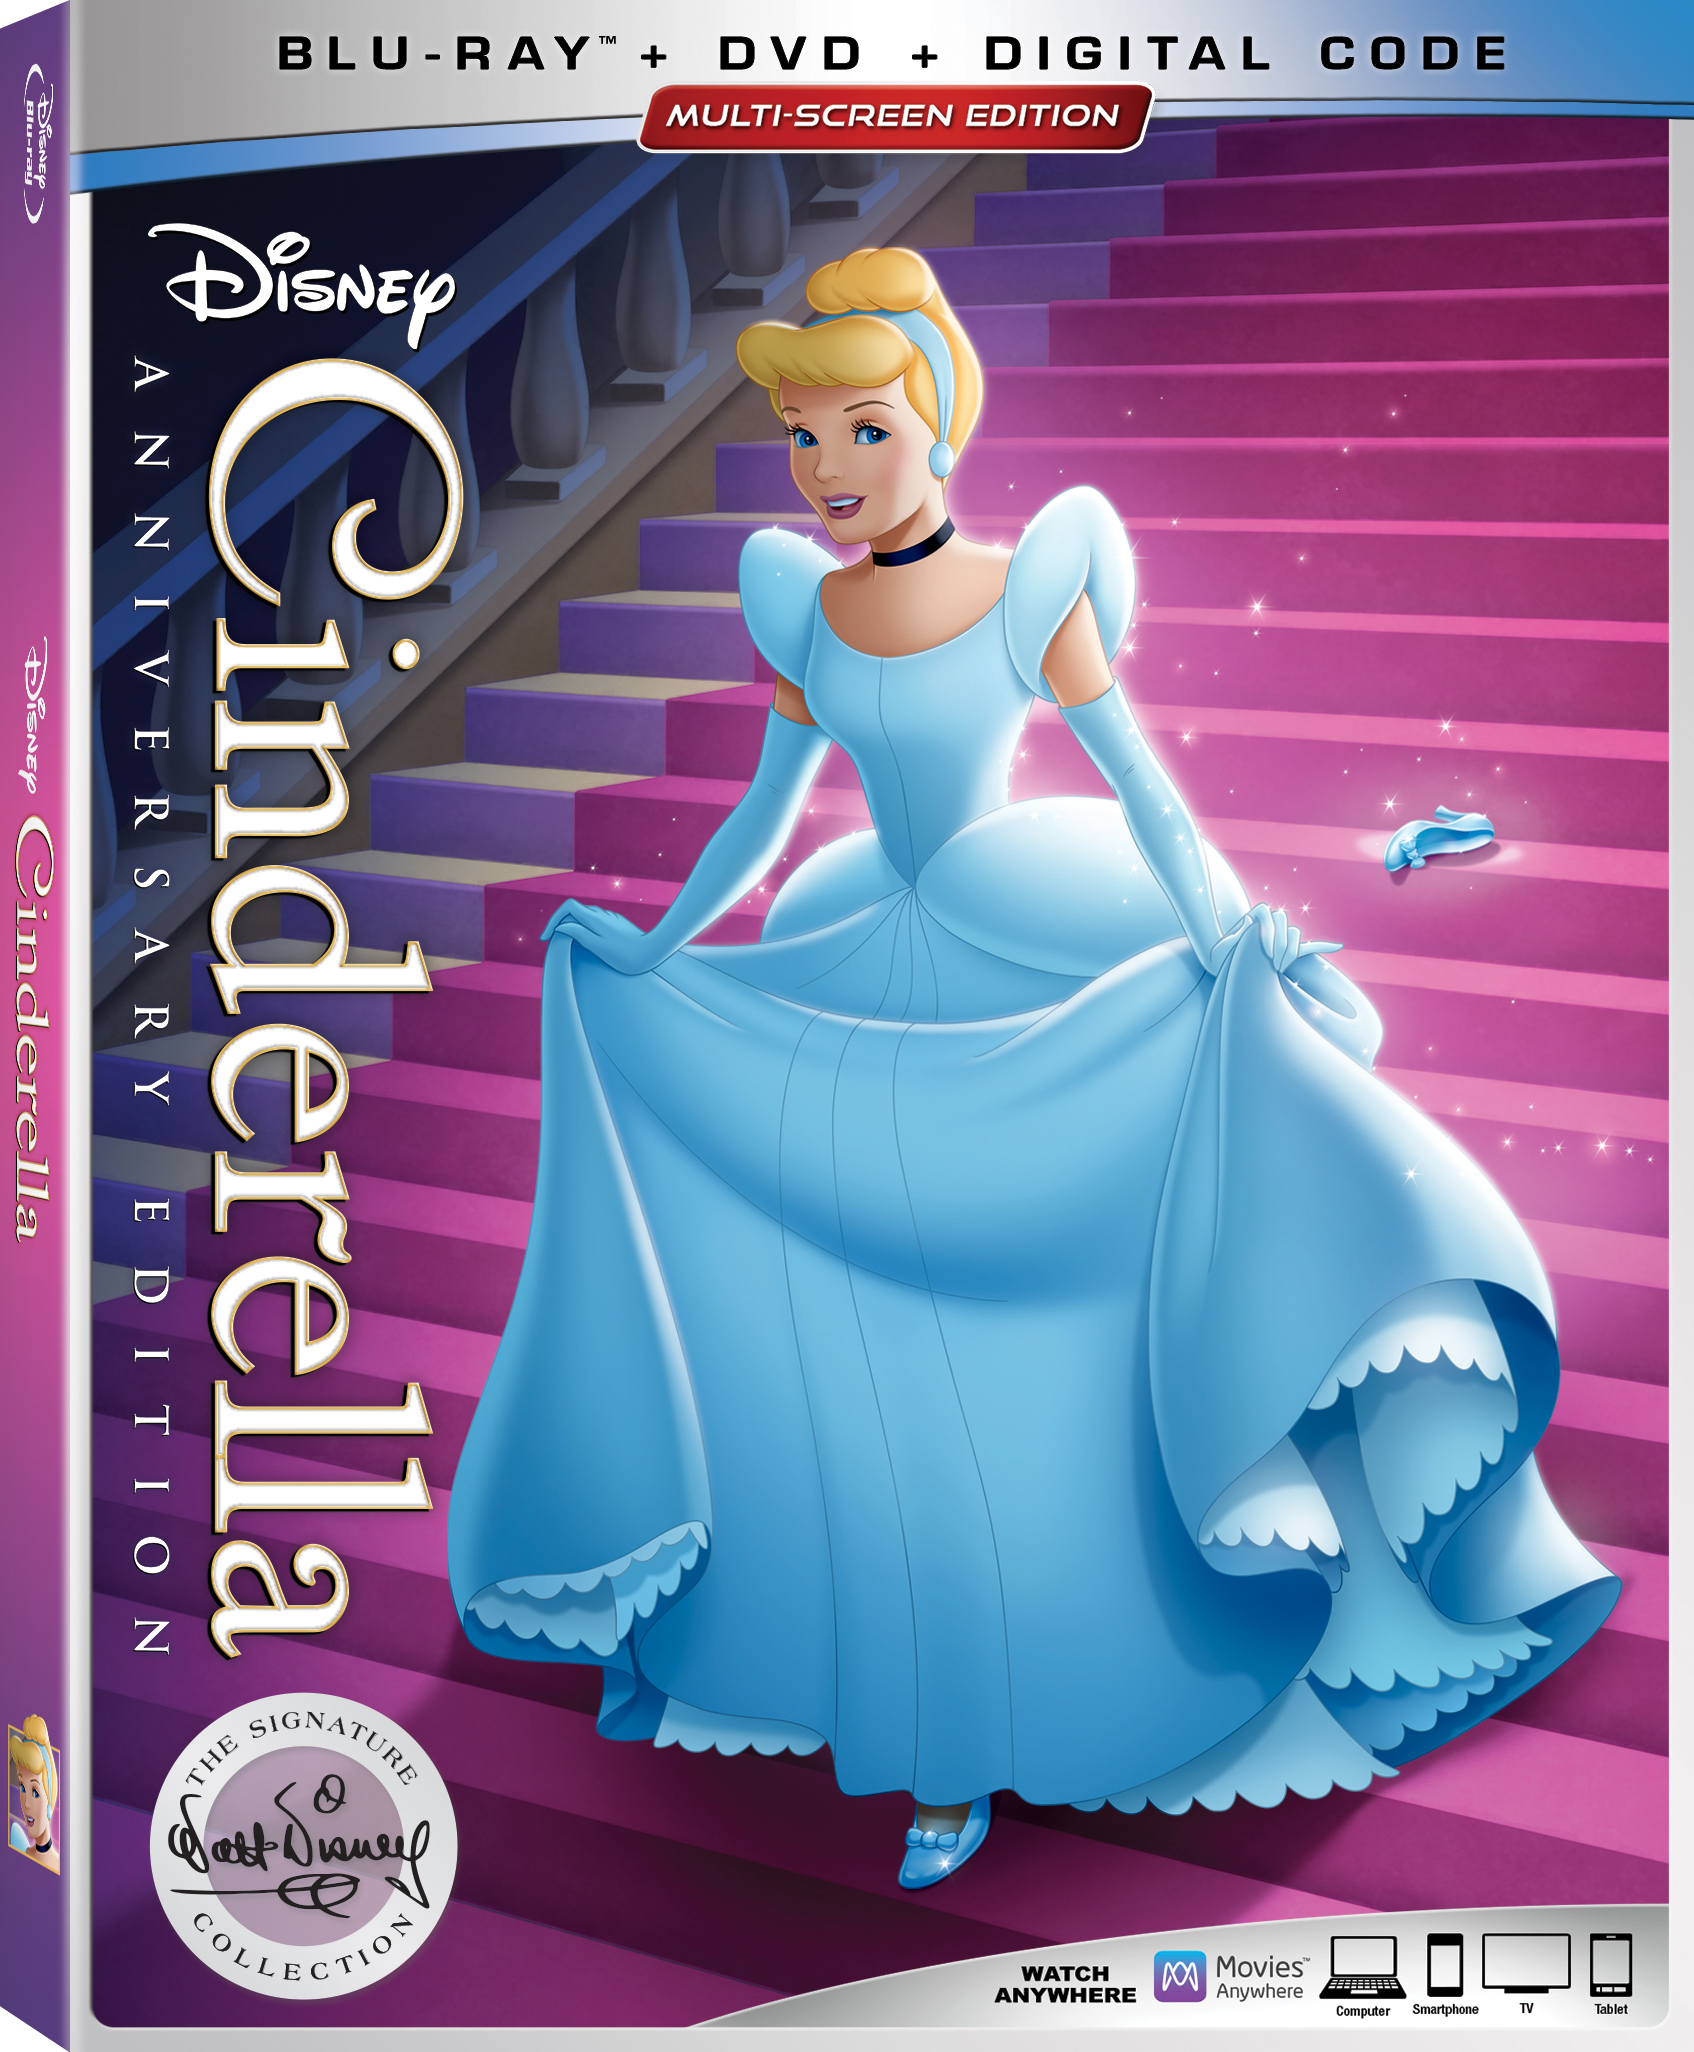 Cinderella Walt Disney Signature Collection Arrives On Digital June 18 And Blu-ray June 25